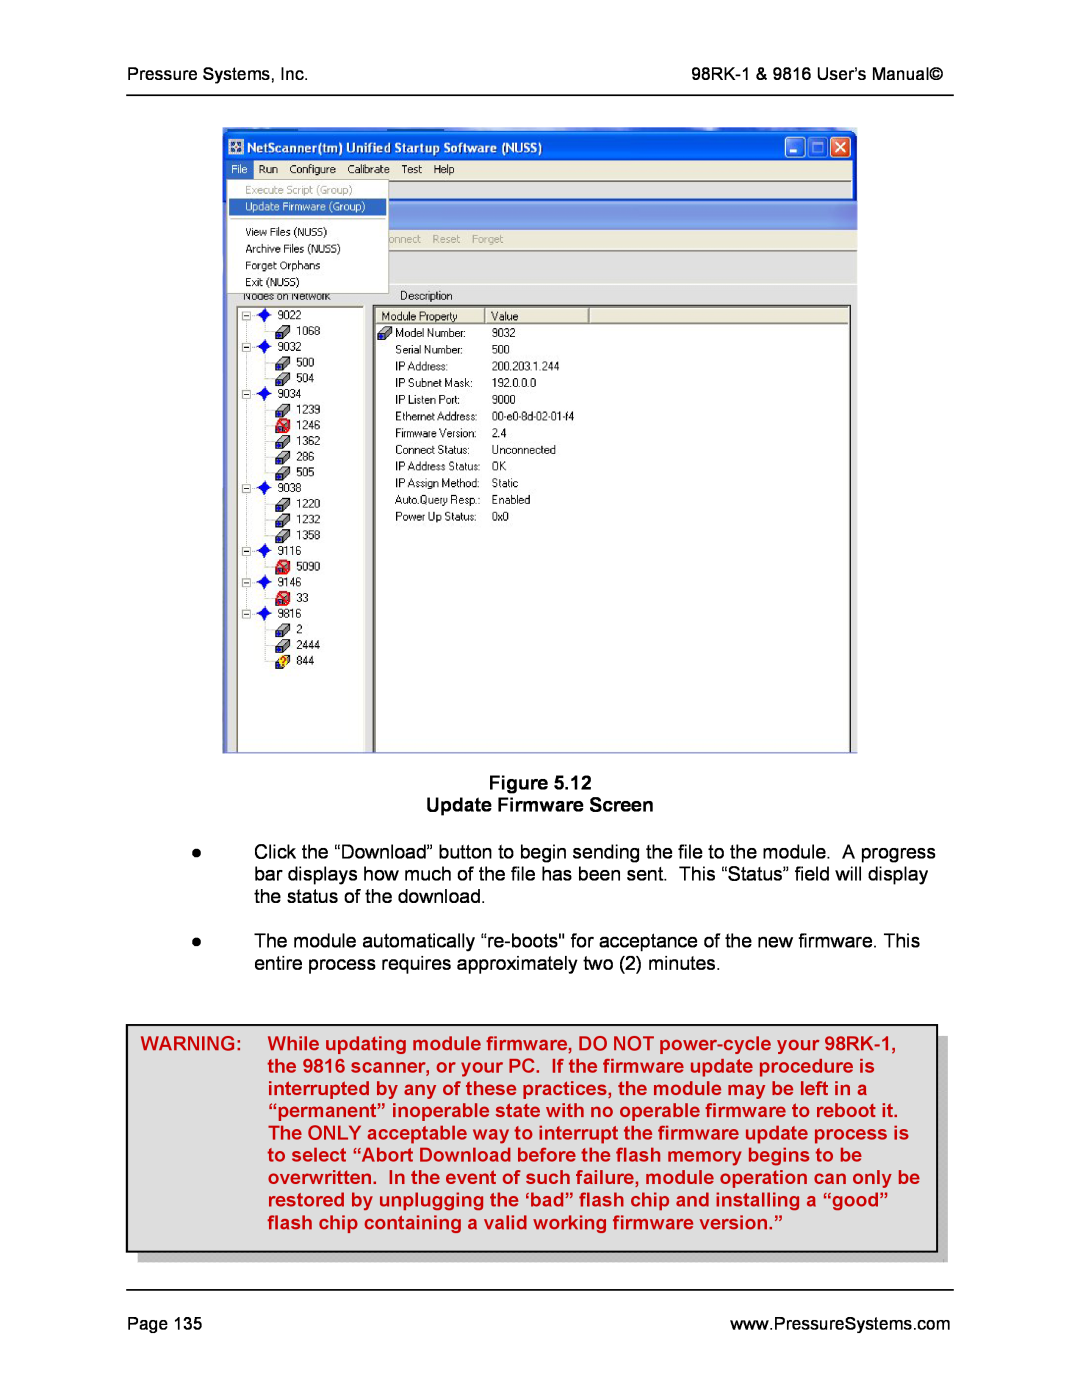 Pressure Systems 98RK-1 user manual Update Firmware Screen 